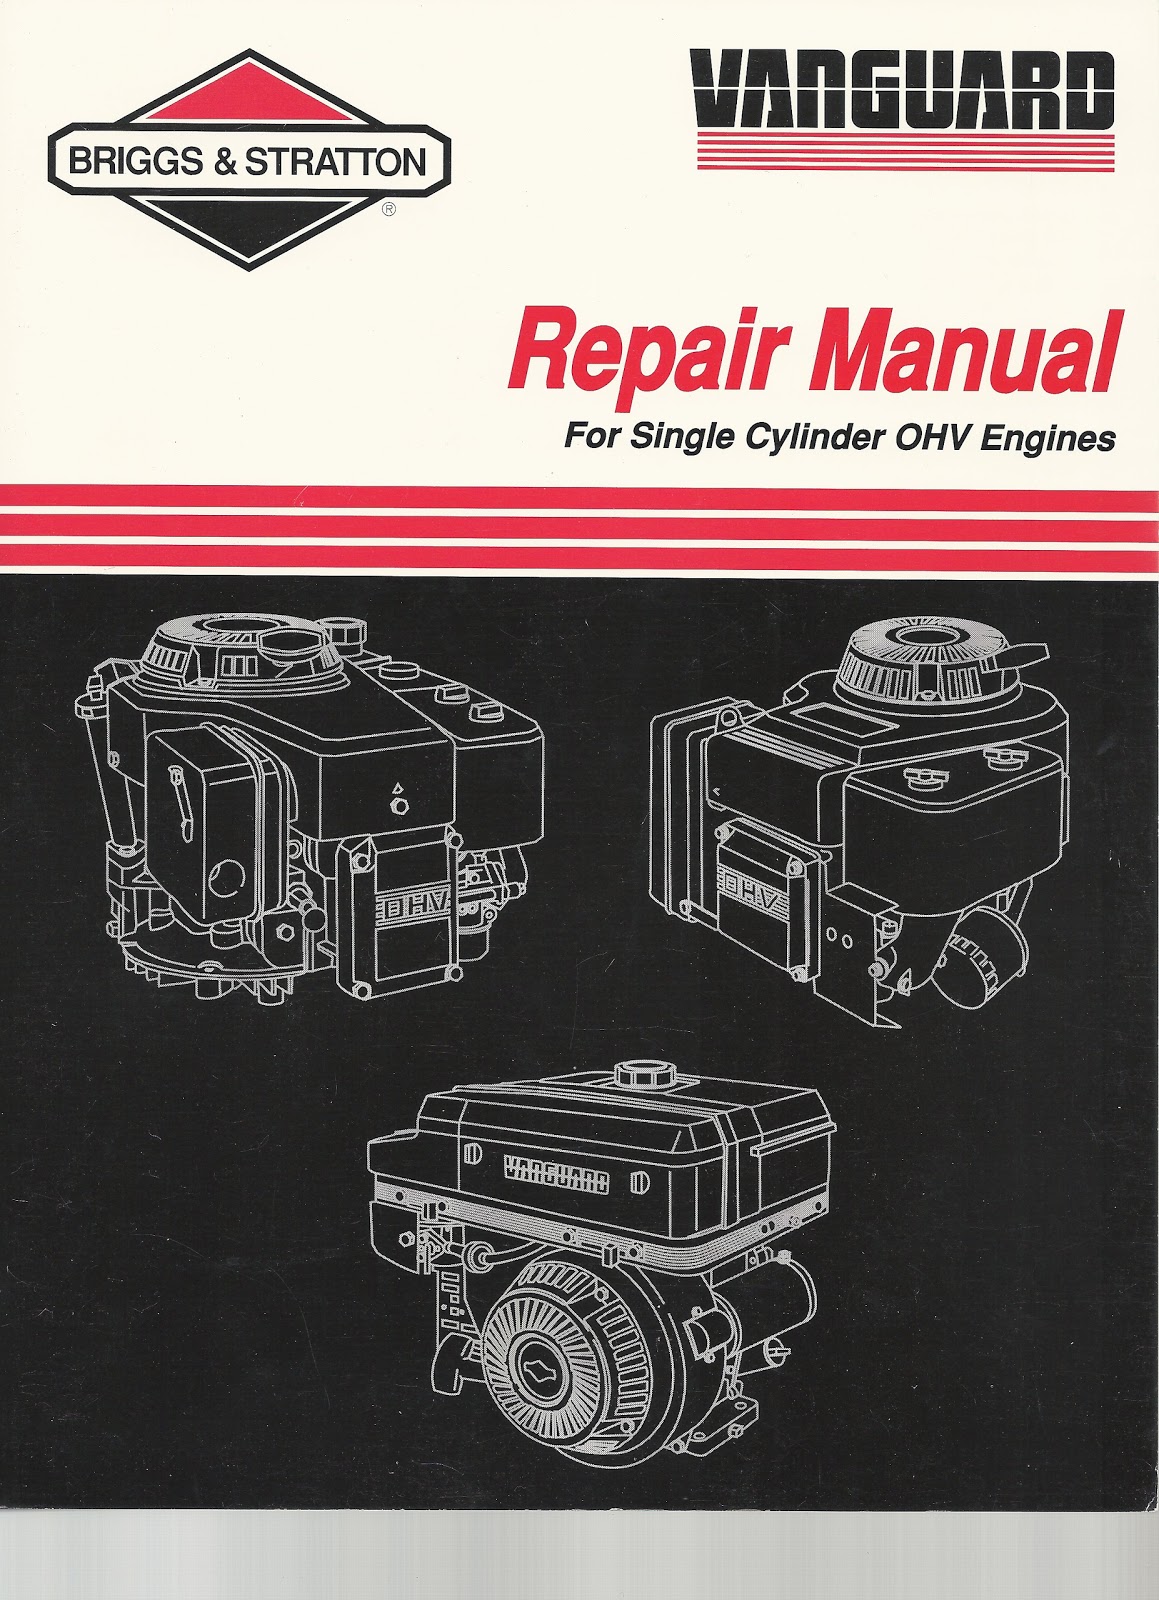 Briggs and stratton 14.5 ohv repair manual